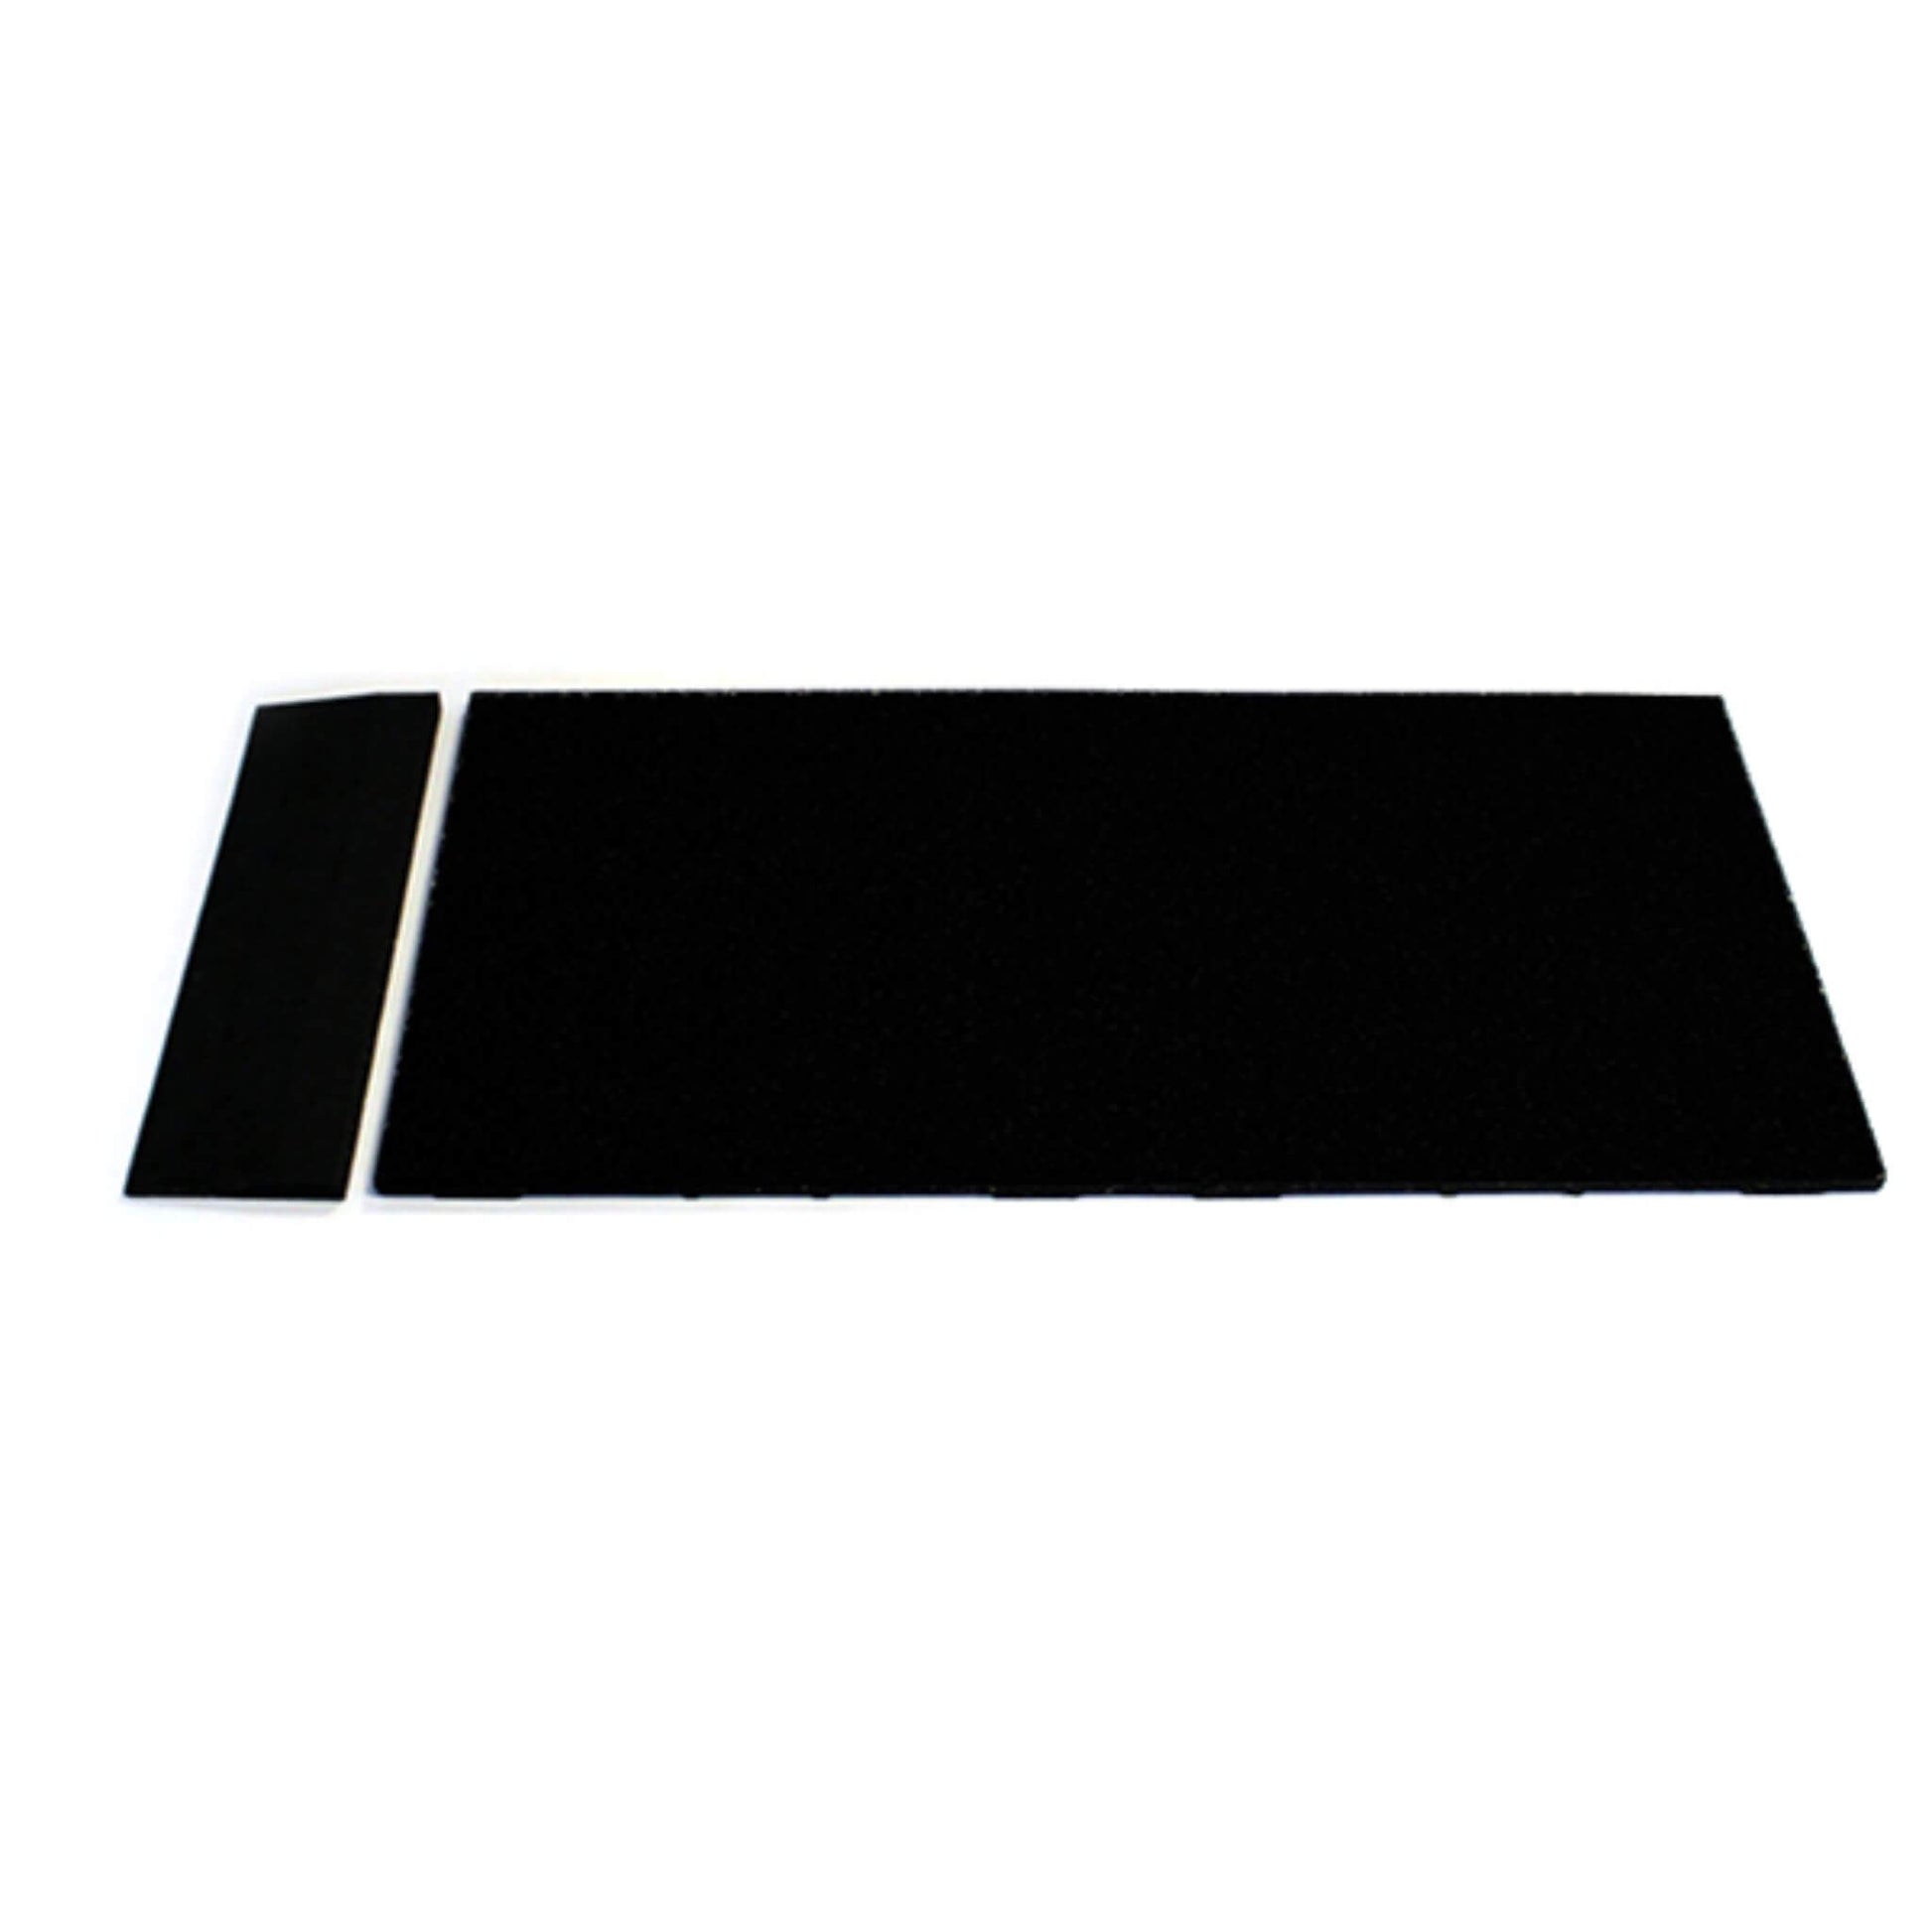 20mm Premium Black Rubber Gym Floor Tile ramped edge